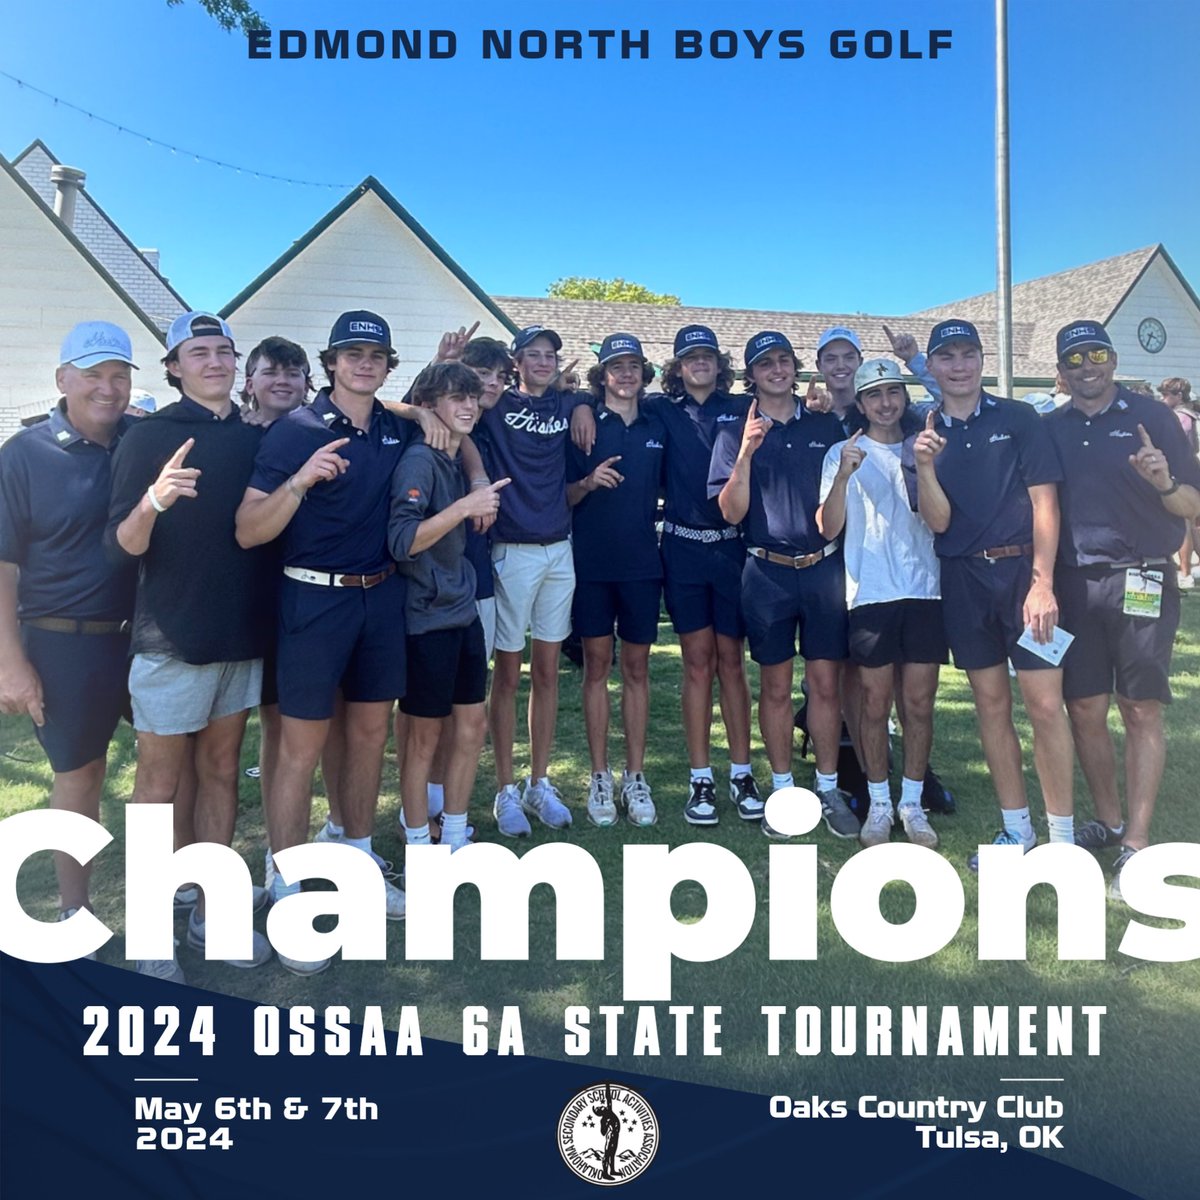 Edmond North Boys Golf wins the 2024 OSSAA 6A State Championship! #HuskyNation #uN1ty @edmondnorthgolf @ENHSHuskyGolf